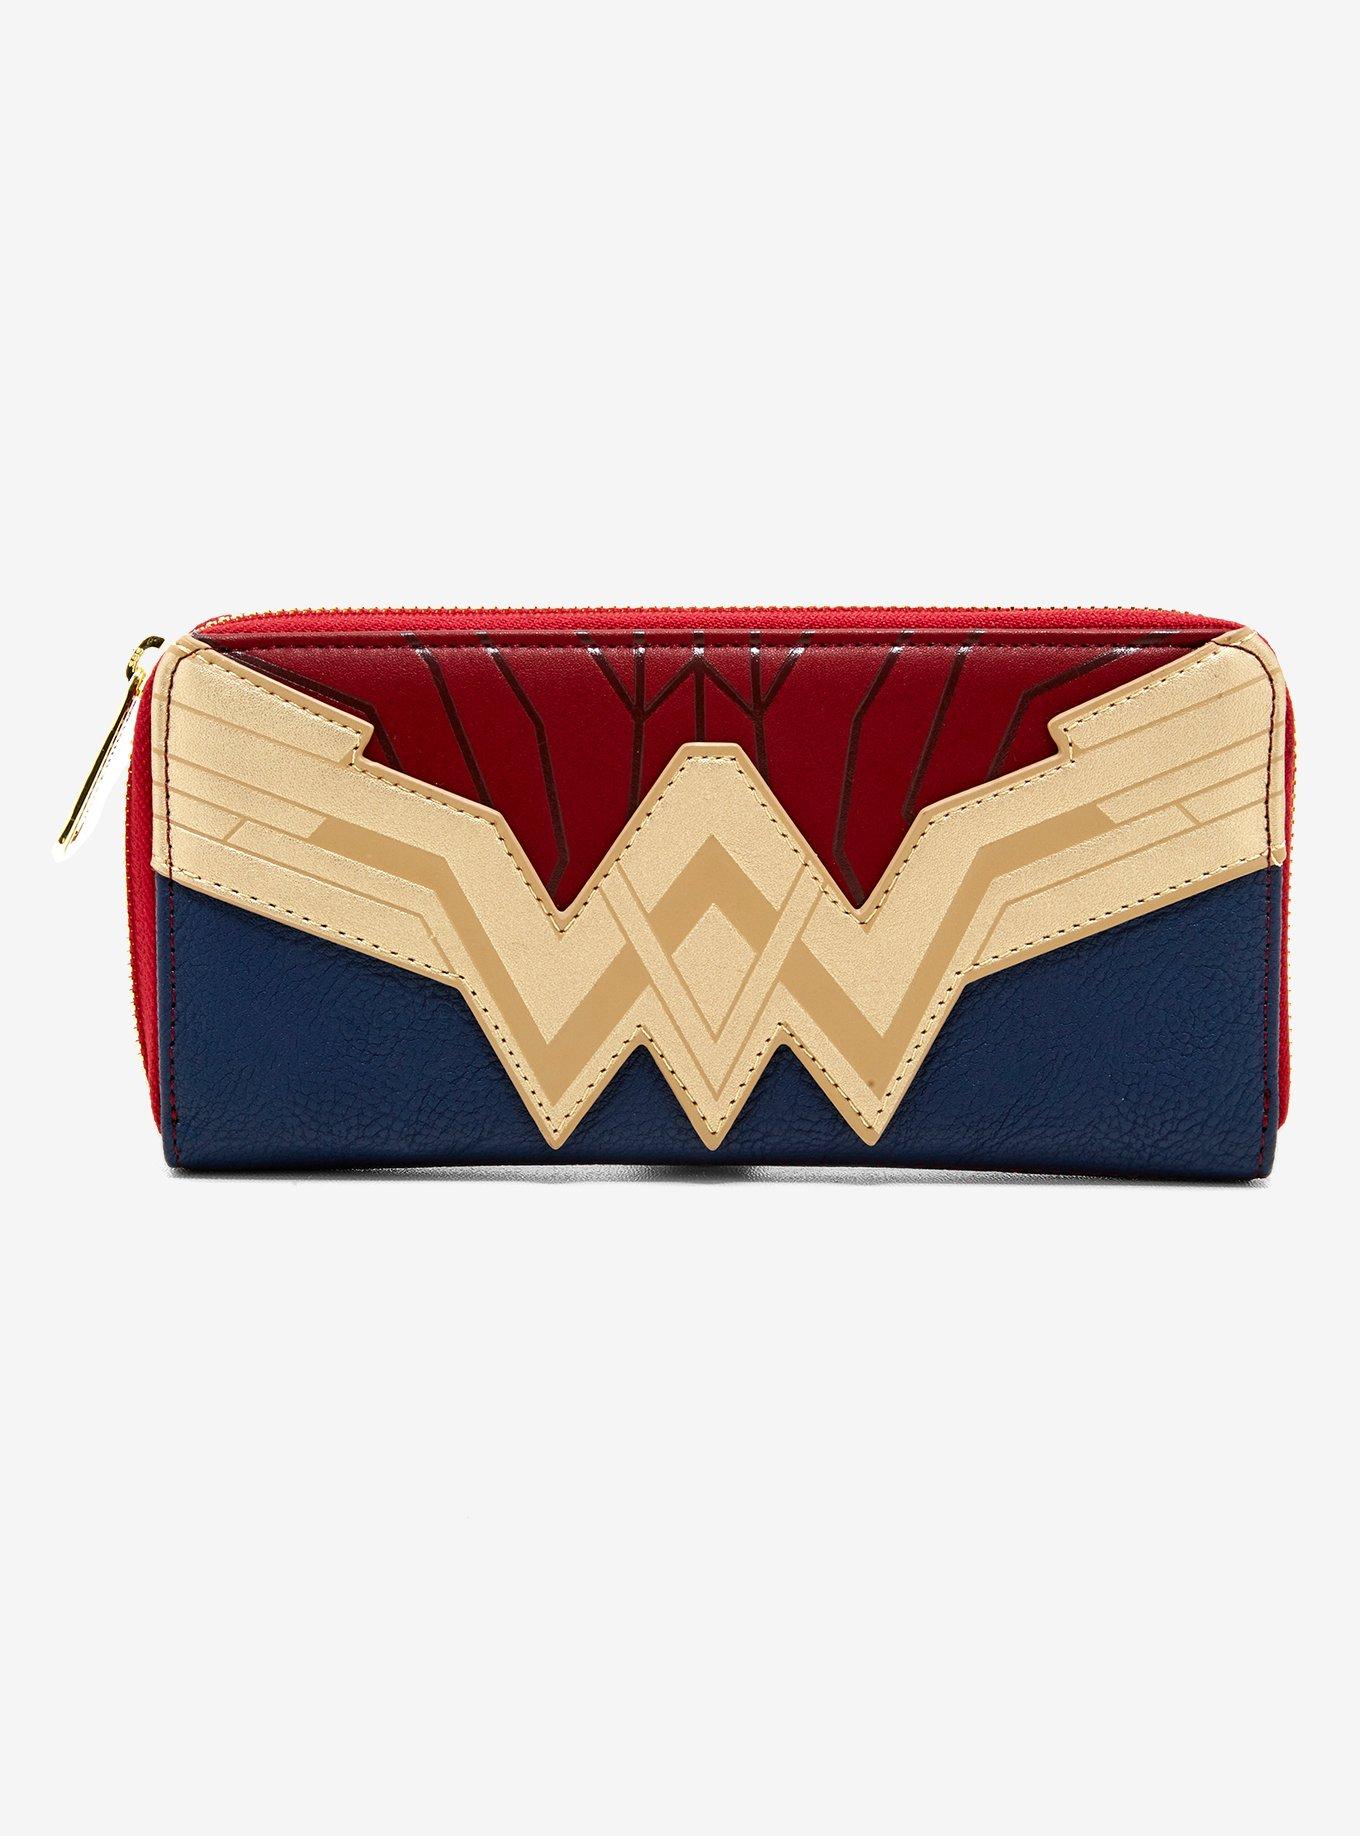 Loungefly DC Comics Justice League Wonder Woman Zipper Wallet, , hi-res